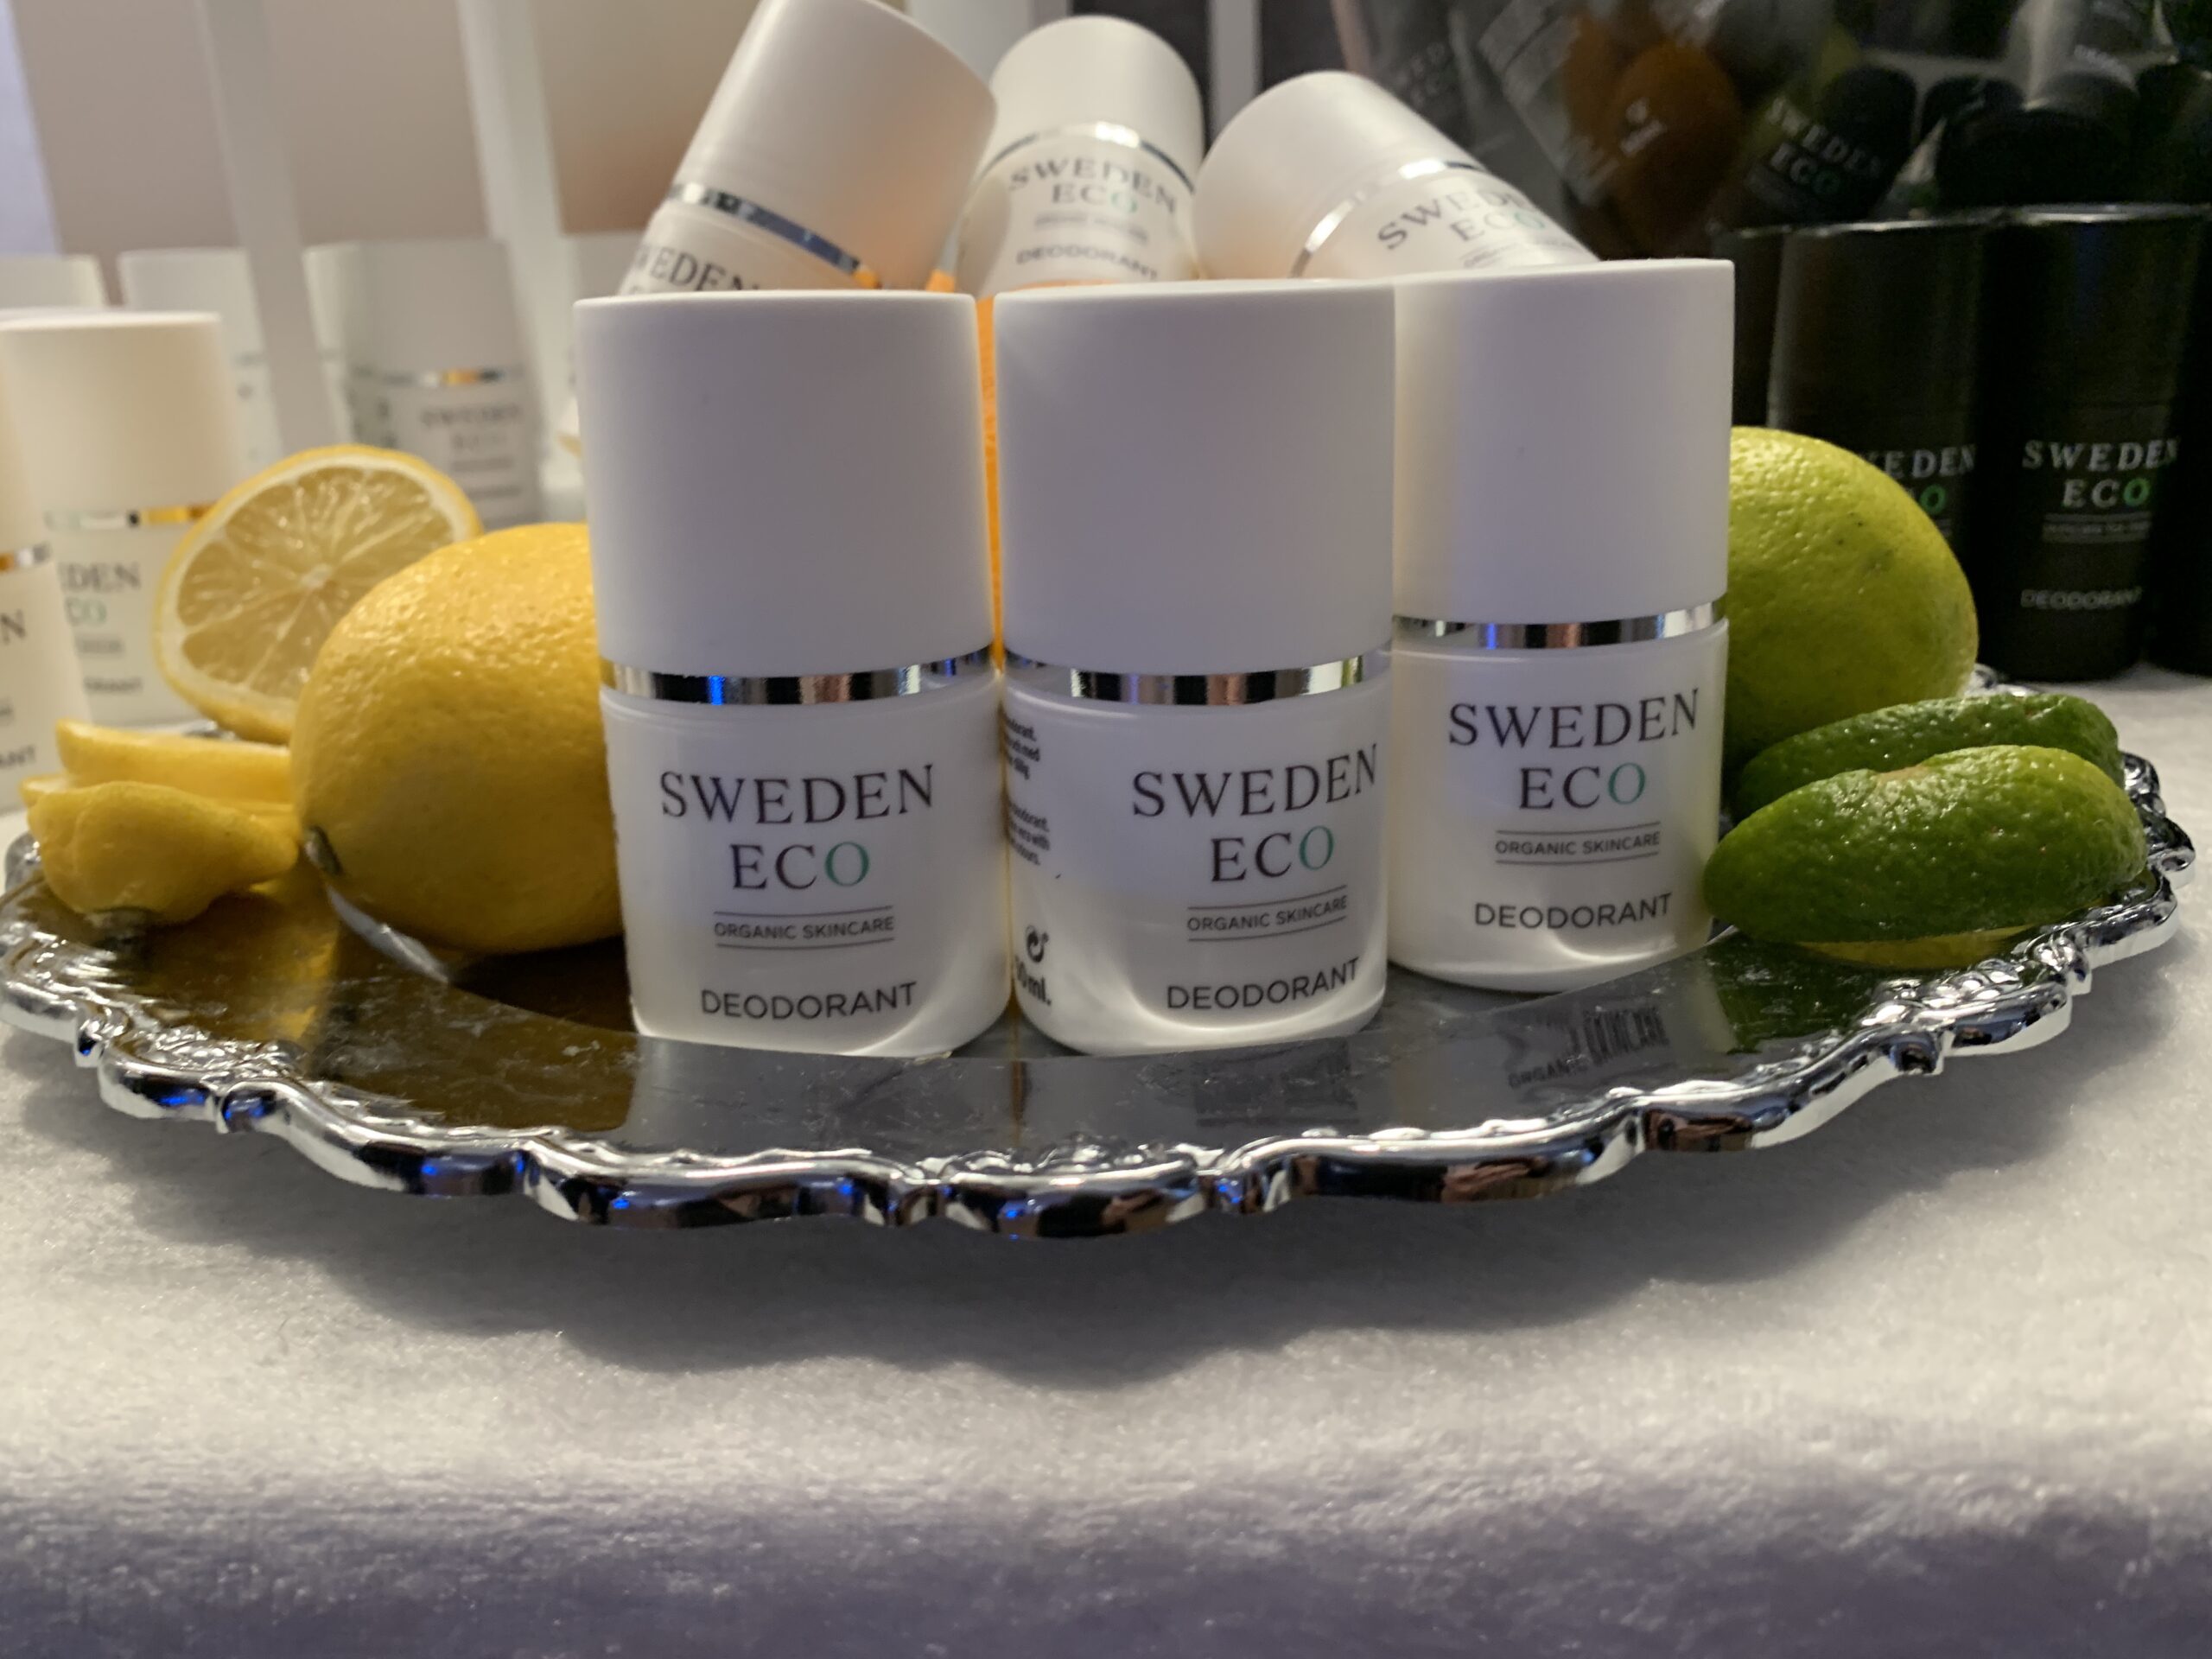 Sweden Eco deodorant